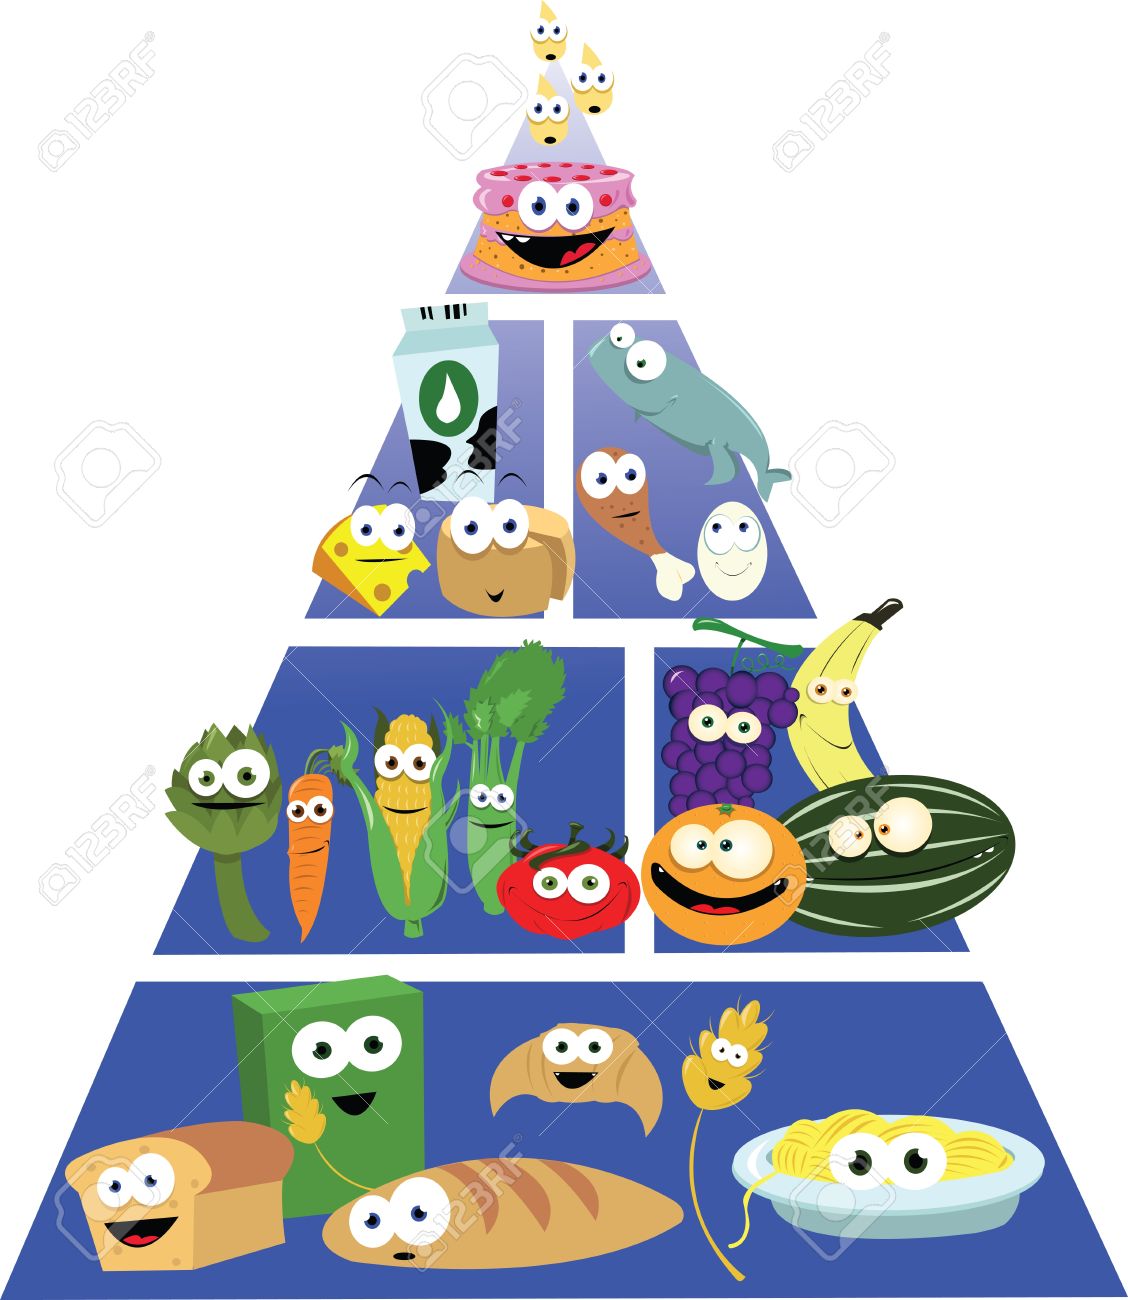 food pyramid: A cartoon repre - Food Pyramid Clipart